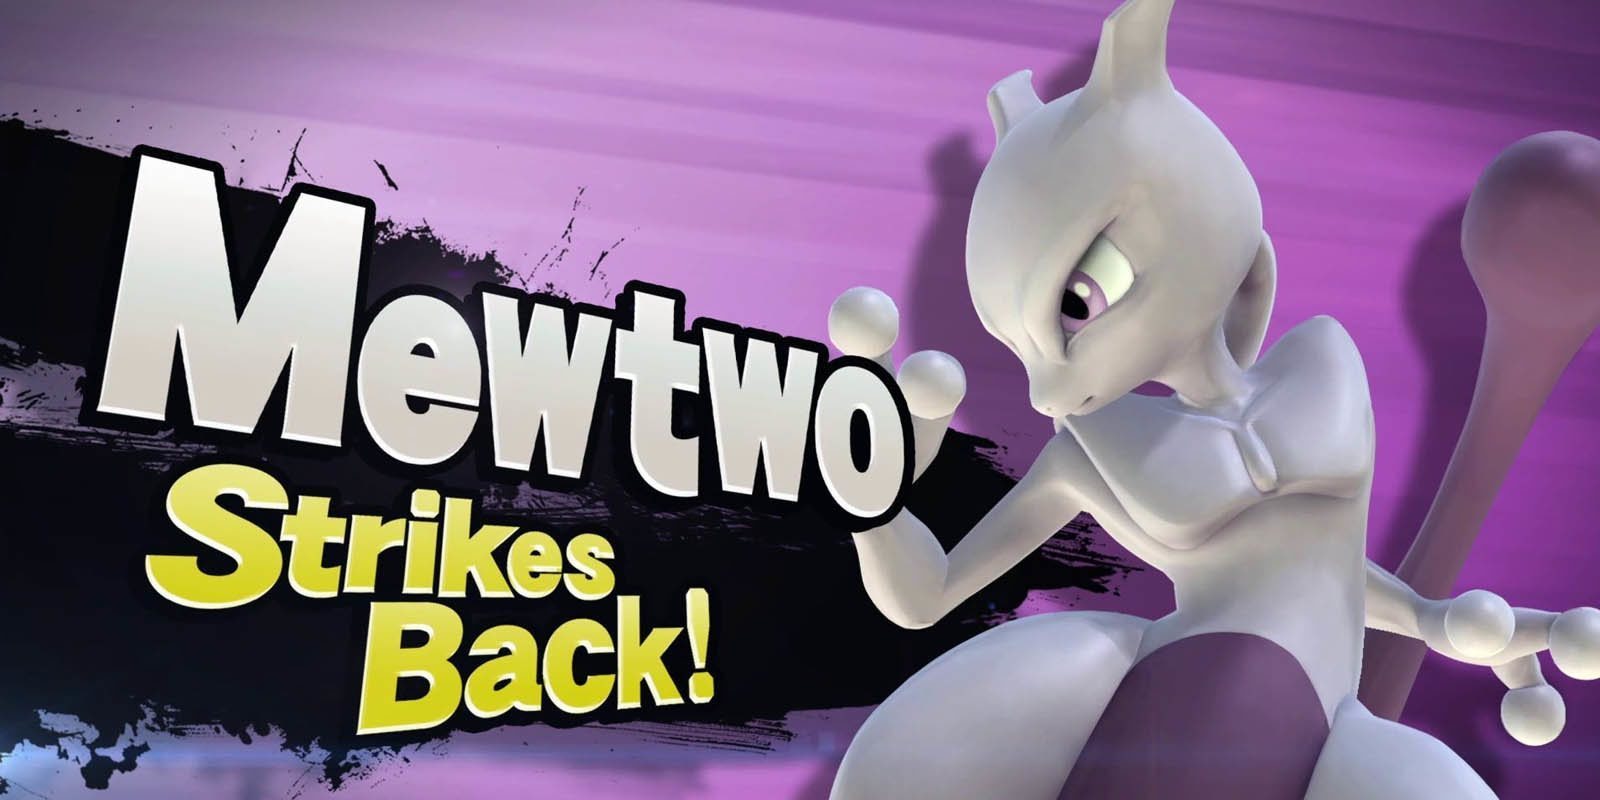 Presentado el póster oficial de 'Pokémon: Mewtwo Strikes Back Evolution'